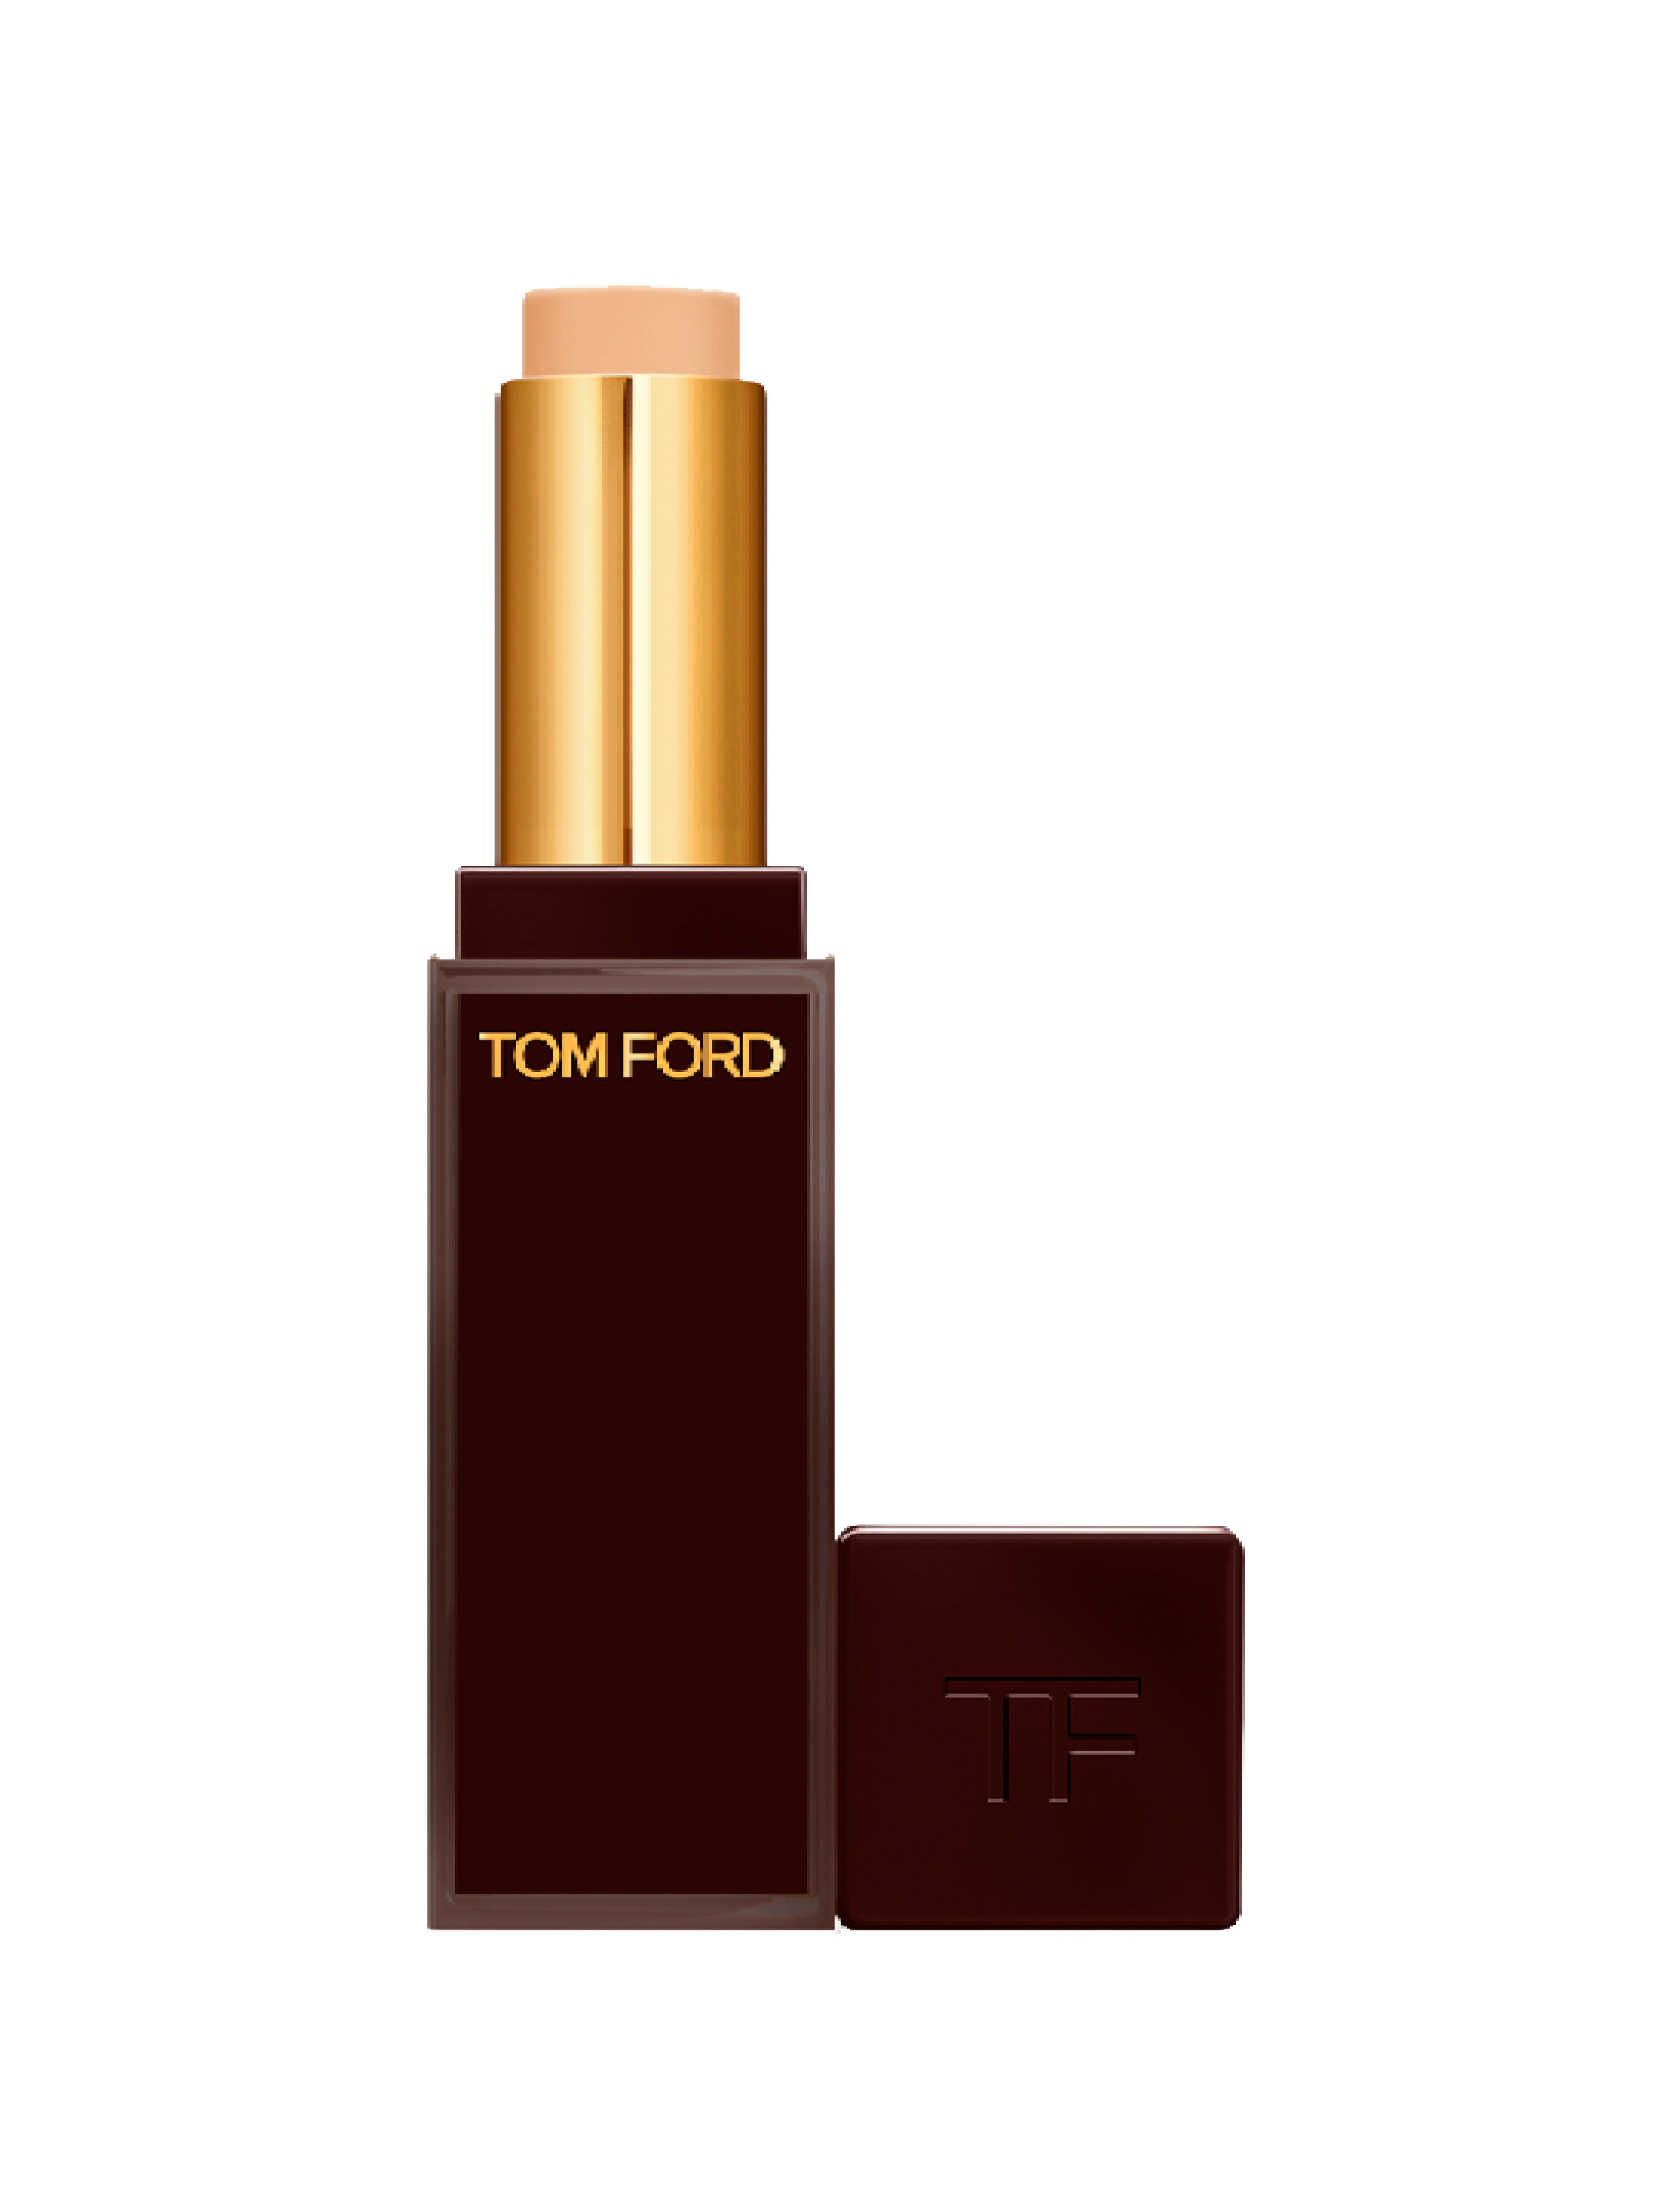 Tom Ford Beauty Traceless Soft Matte Concealer, shade 2W0 Beige